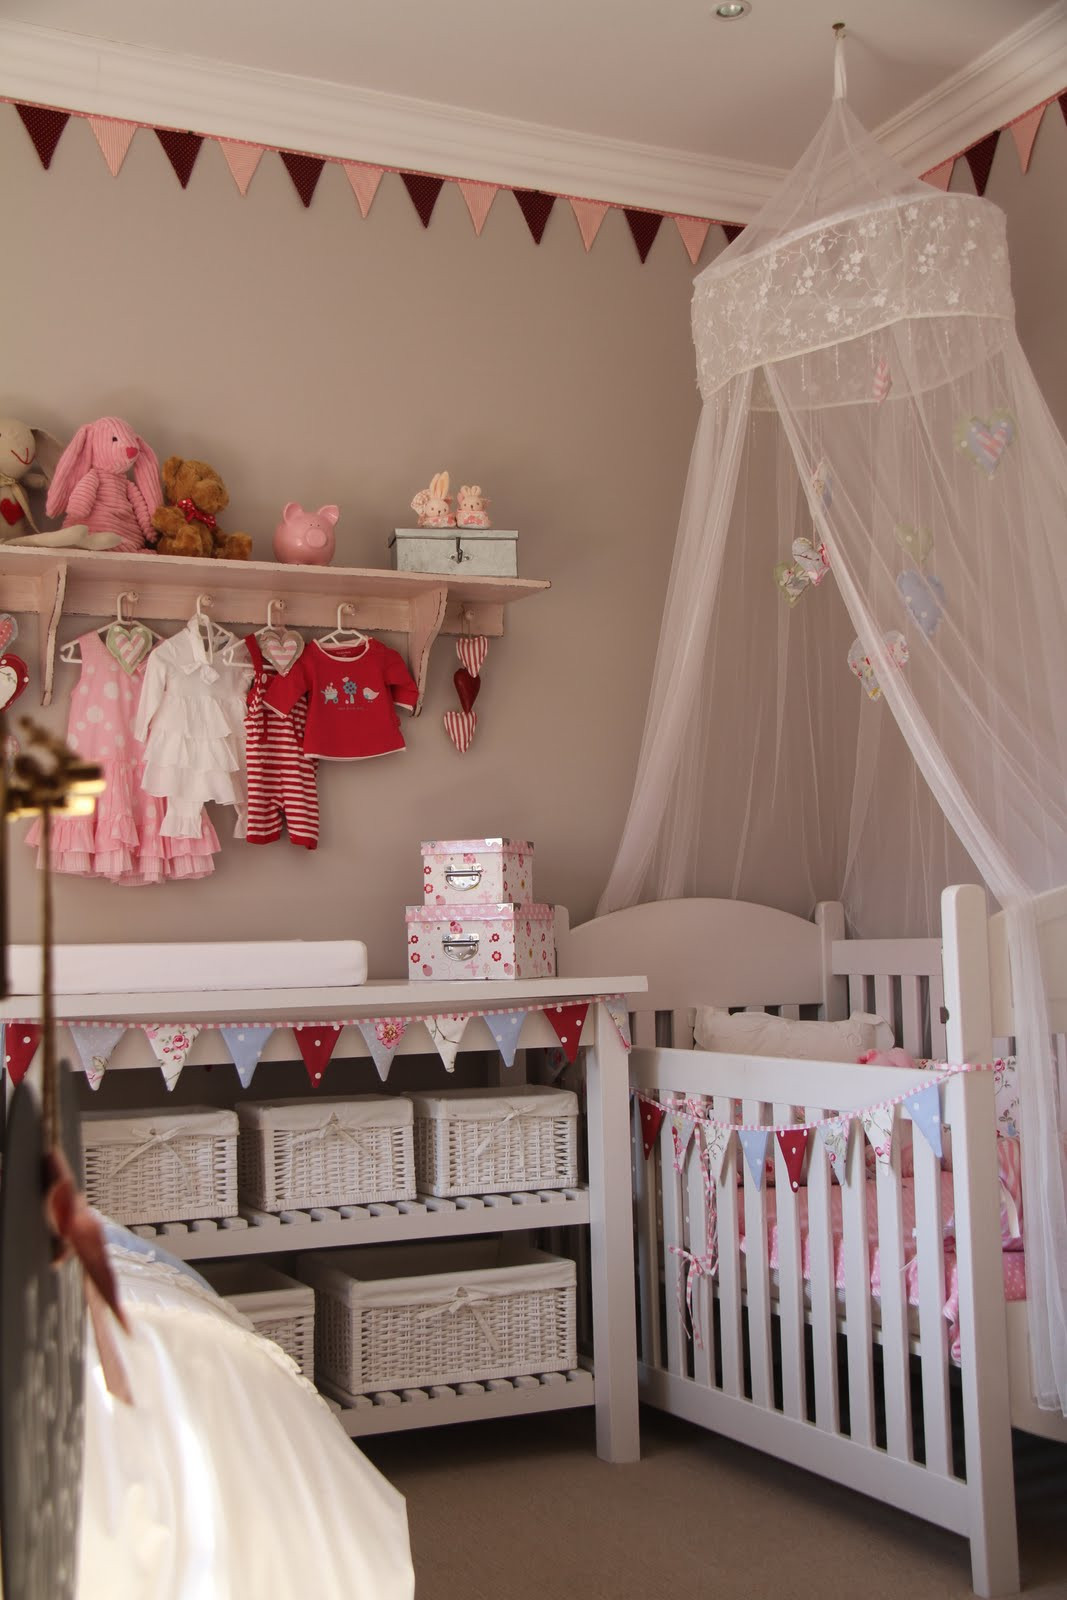 Baby Room Decorations Diy
 I SPY PRETTY Our Baby Girl Mia s DIY Nursery